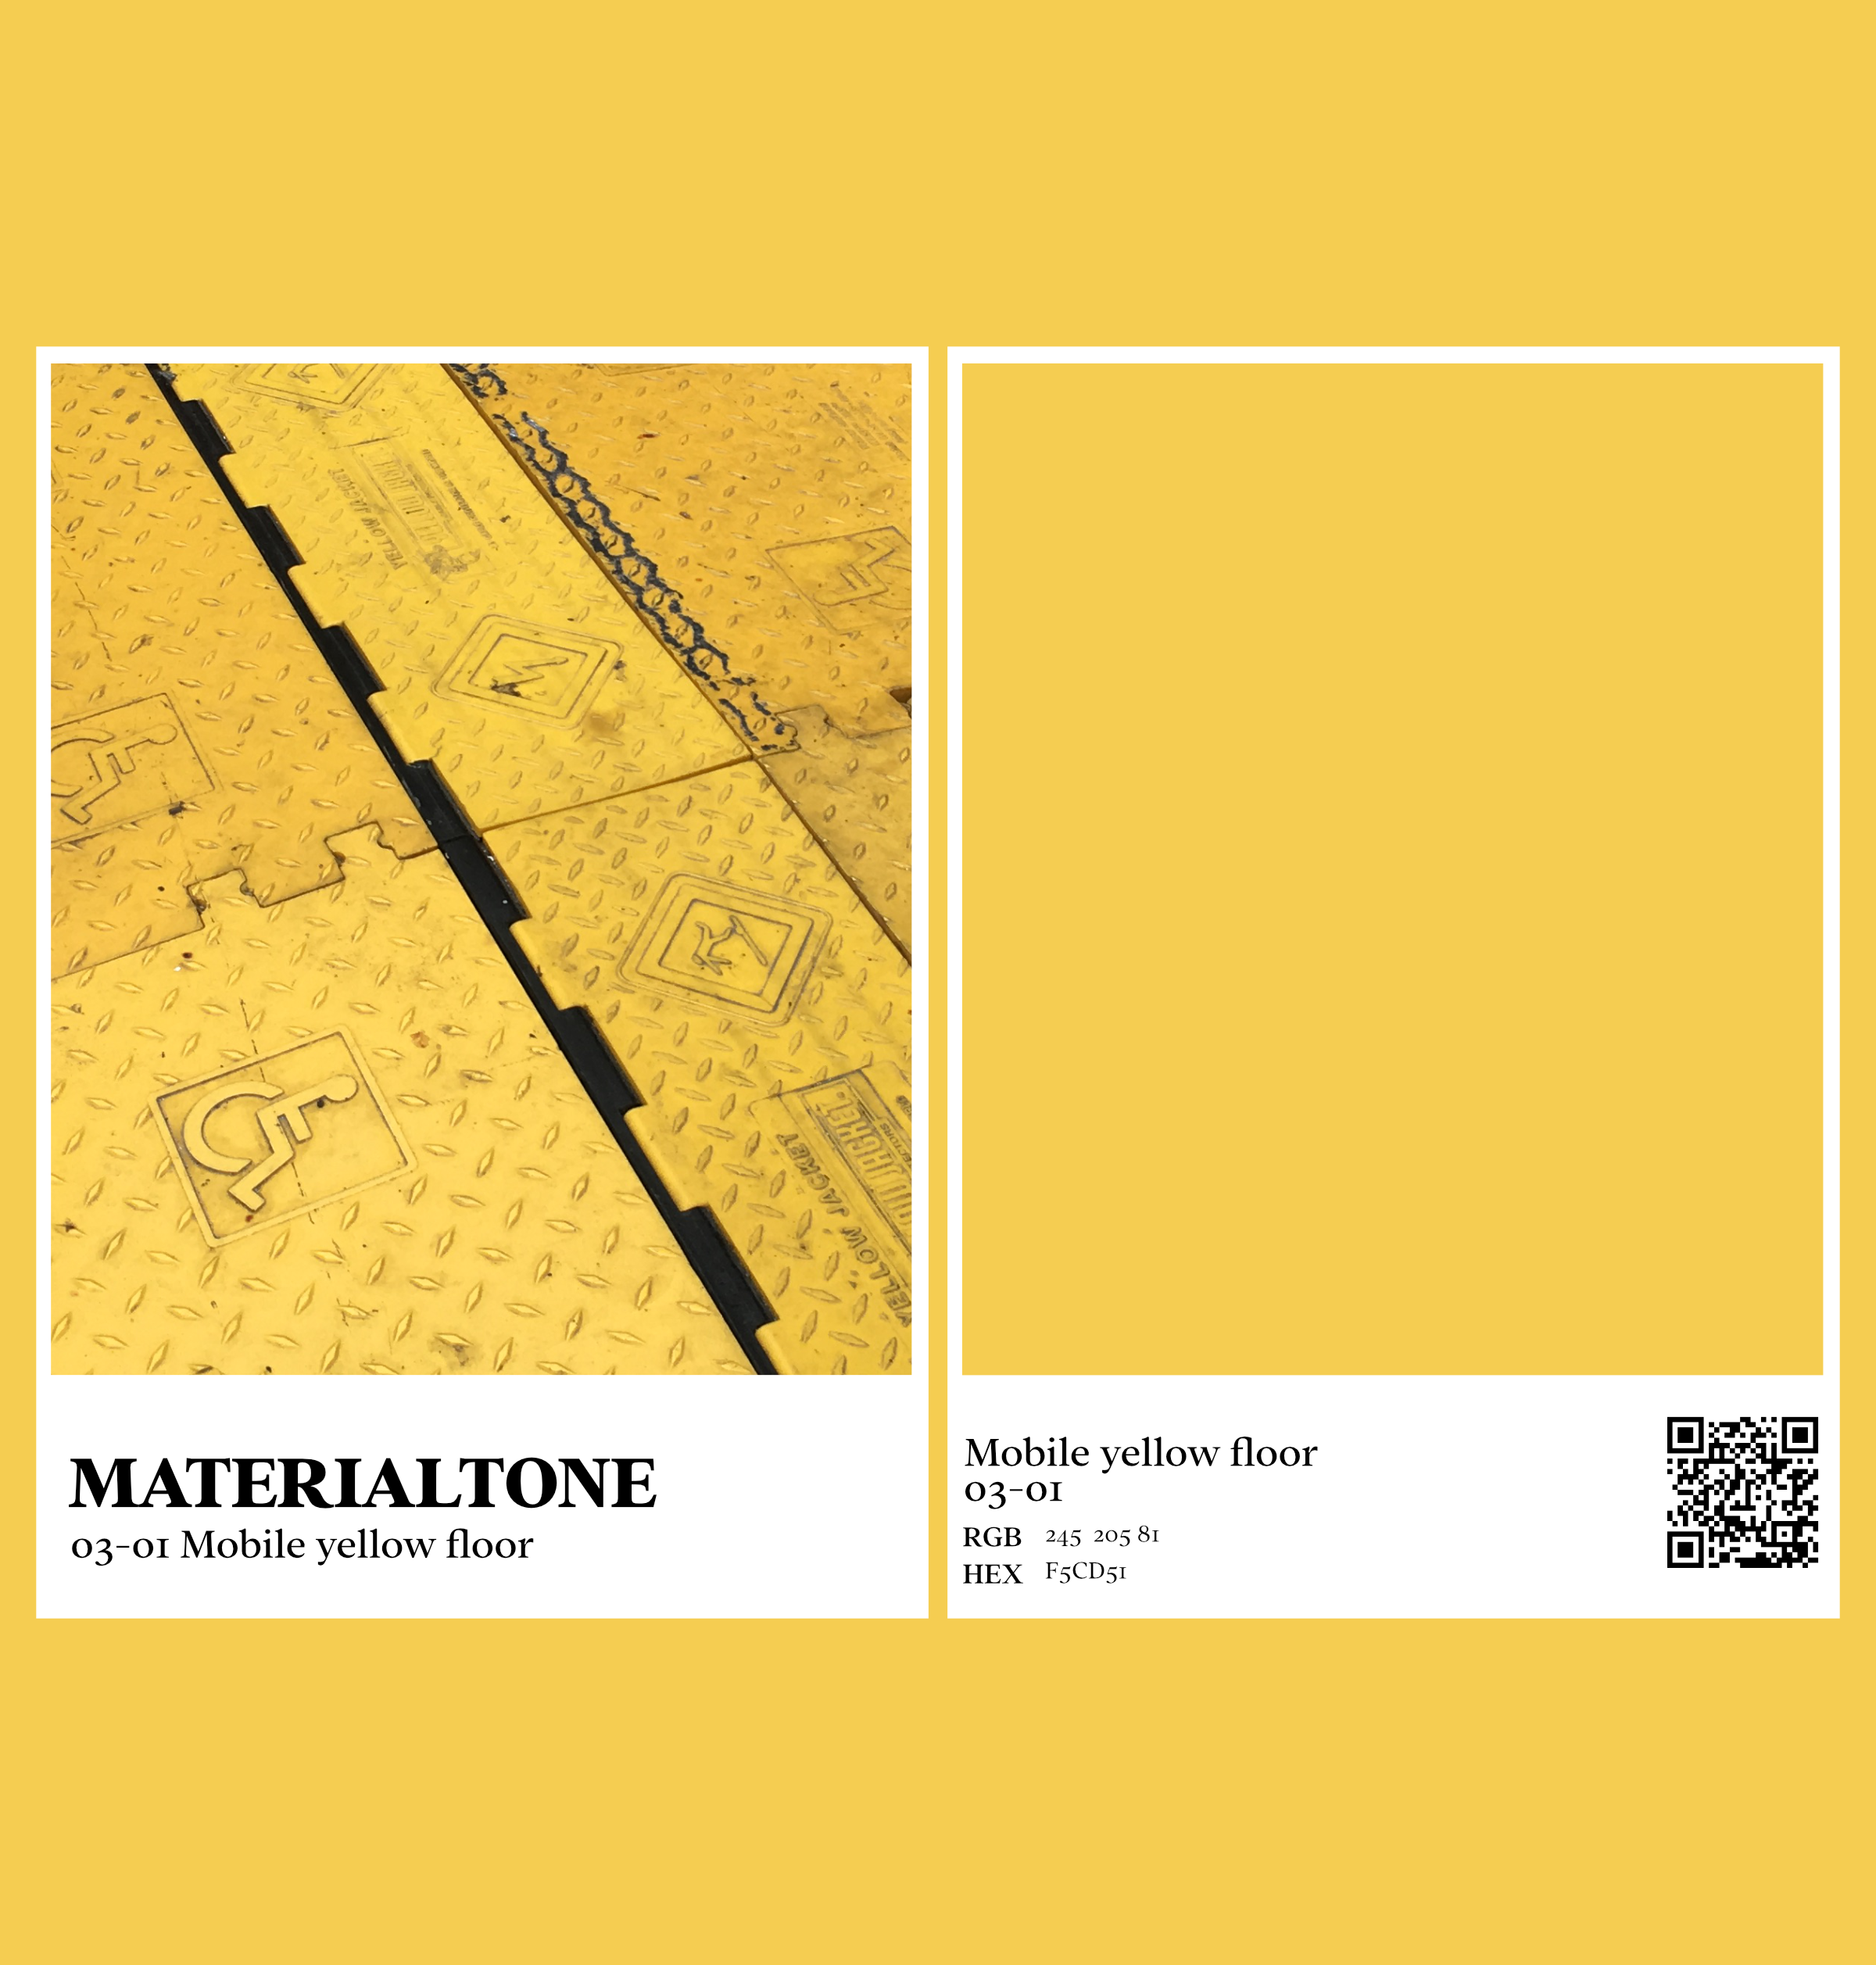 Materialtone